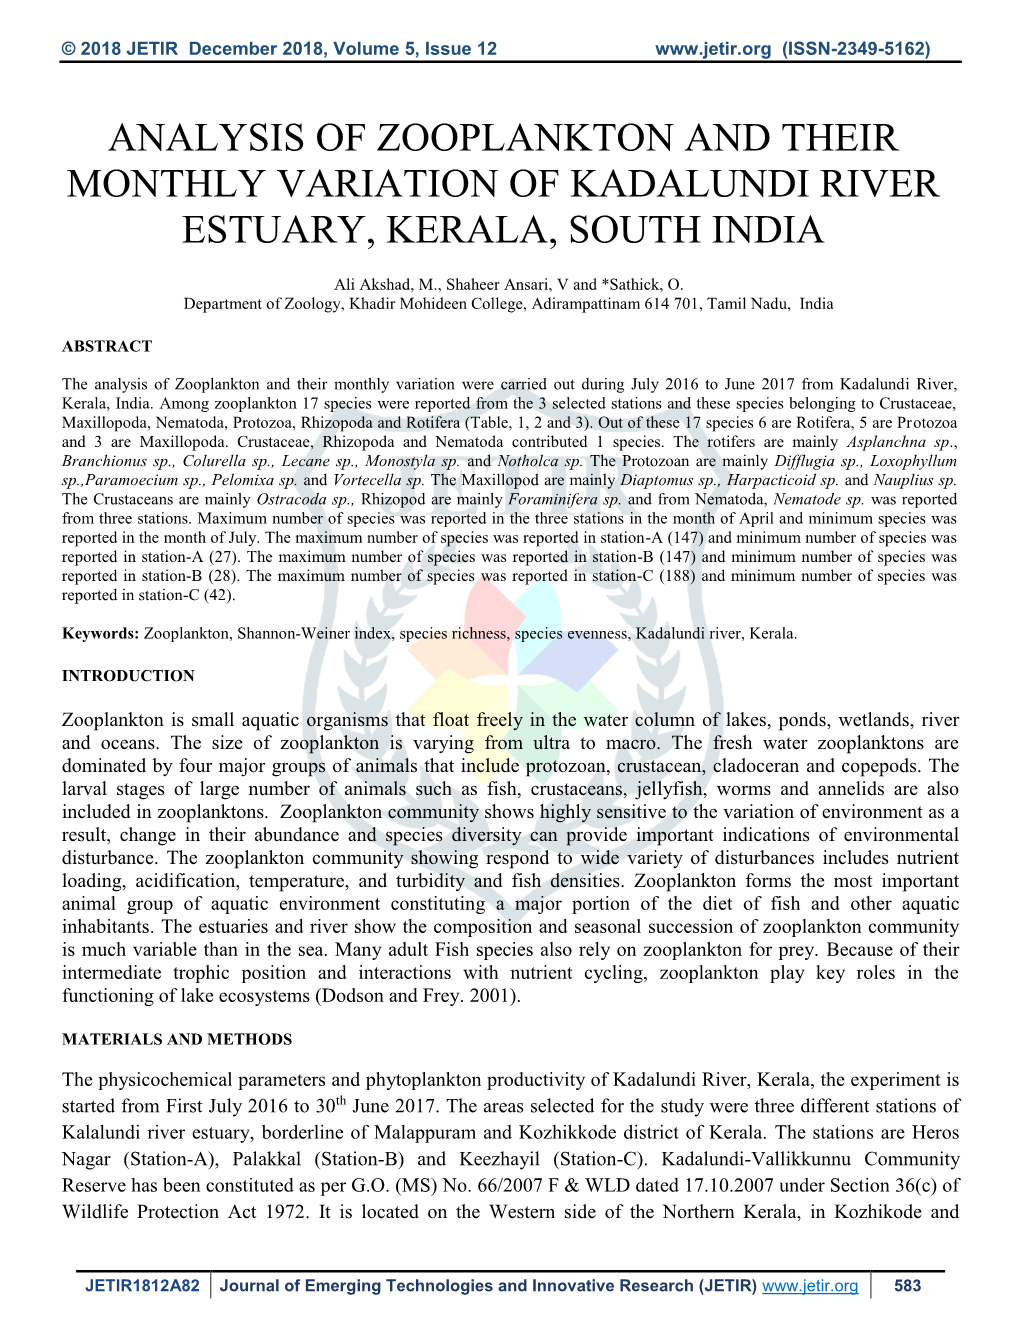 Analysis of Zooplankton and Their Monthly Variation of Kadalundi River Estuary, Kerala, South India